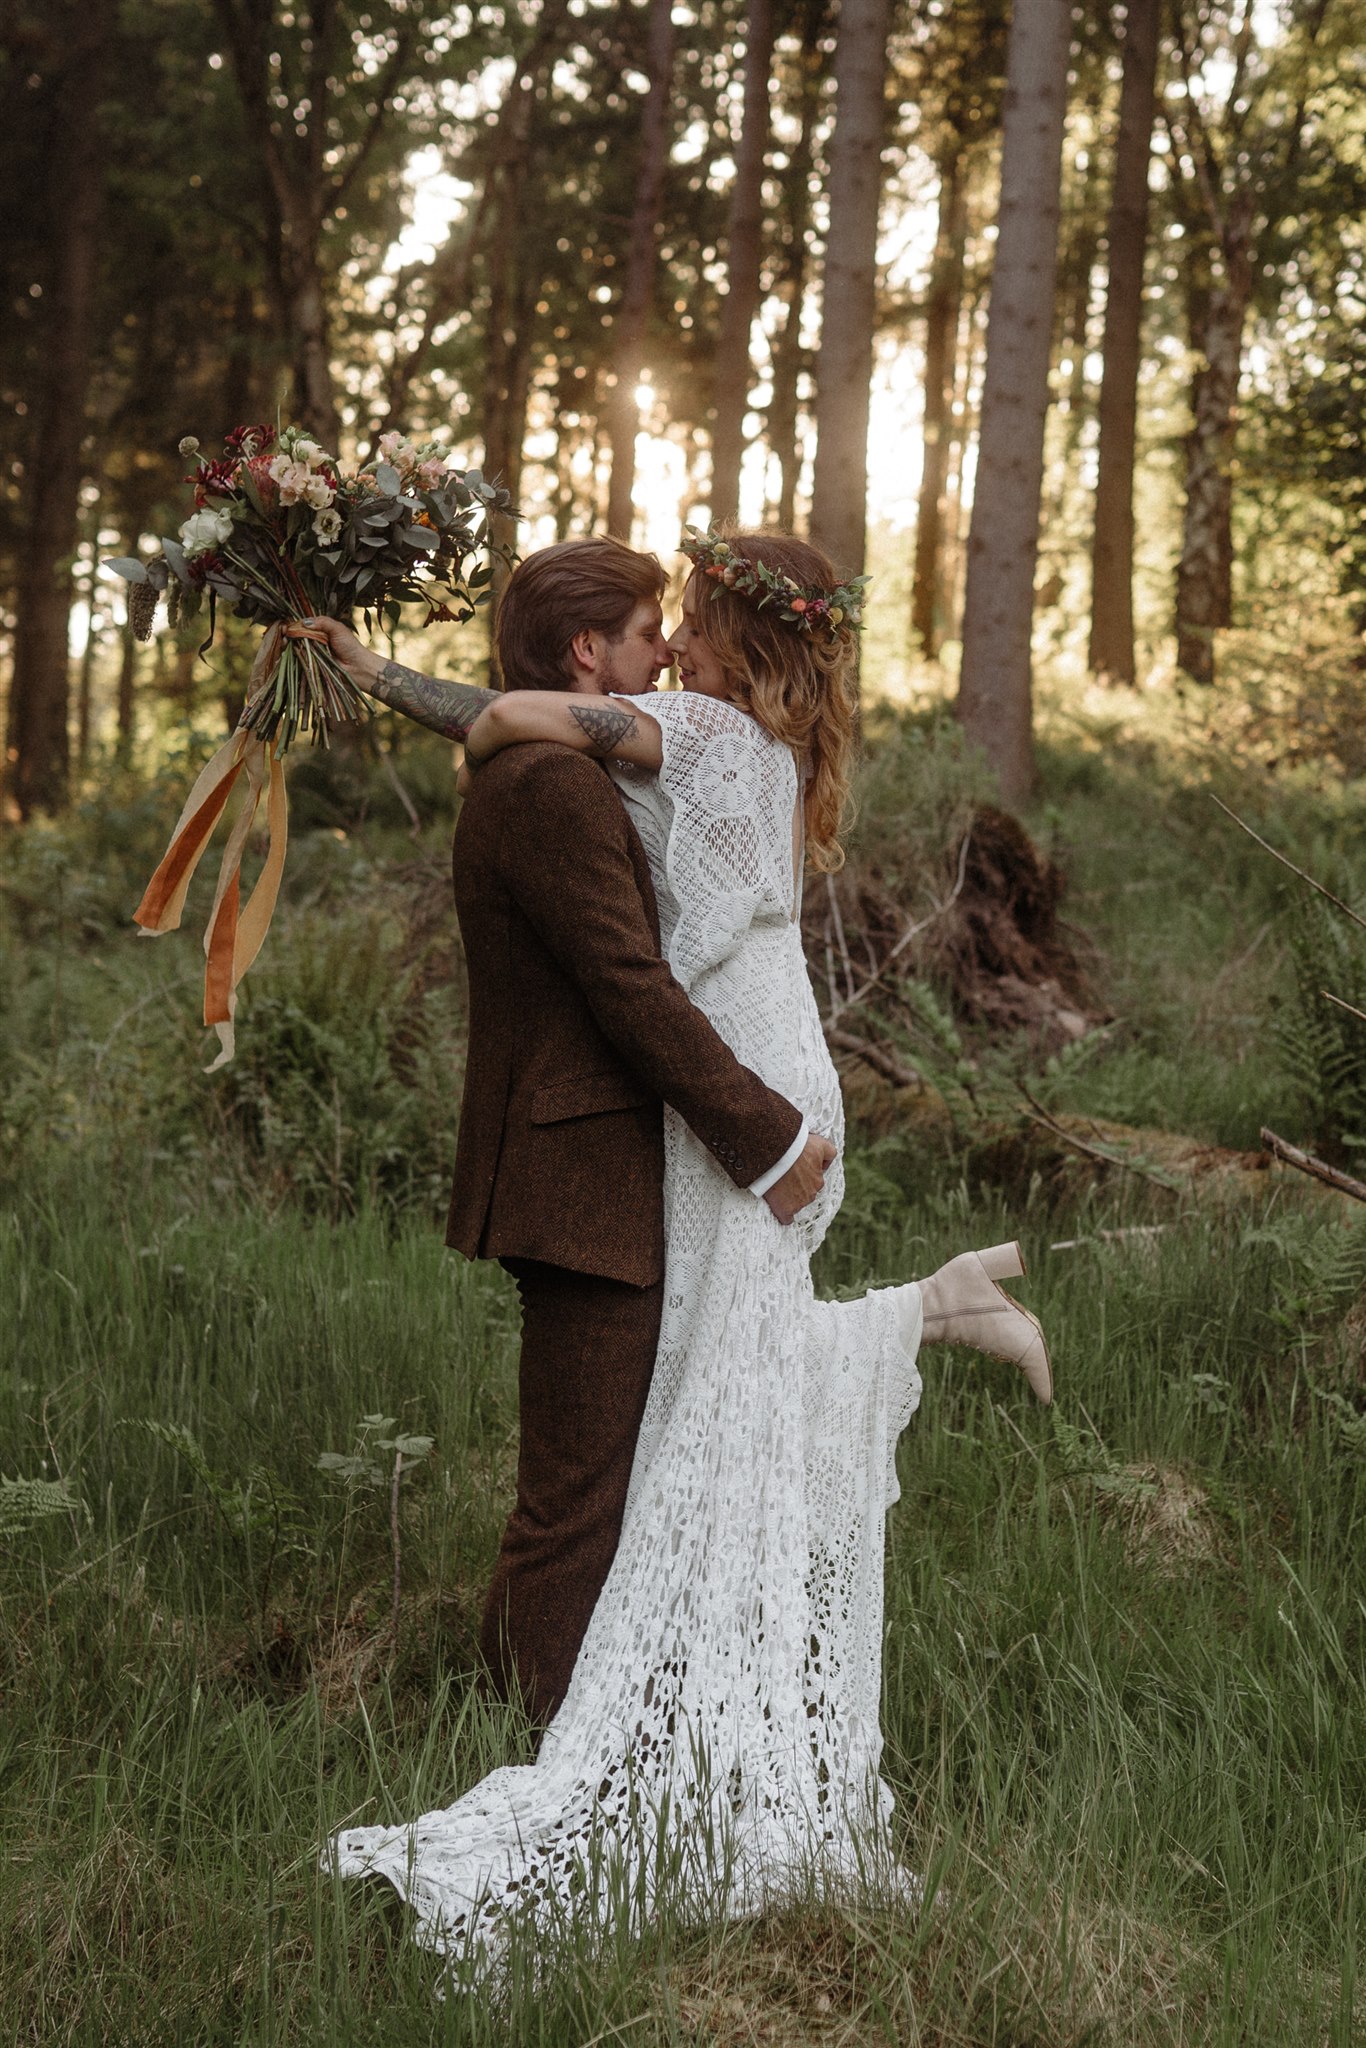 fleetwood mac inspired wedding - forest wedding inspiration - bohemian outdoor wedding - lace wedding dress